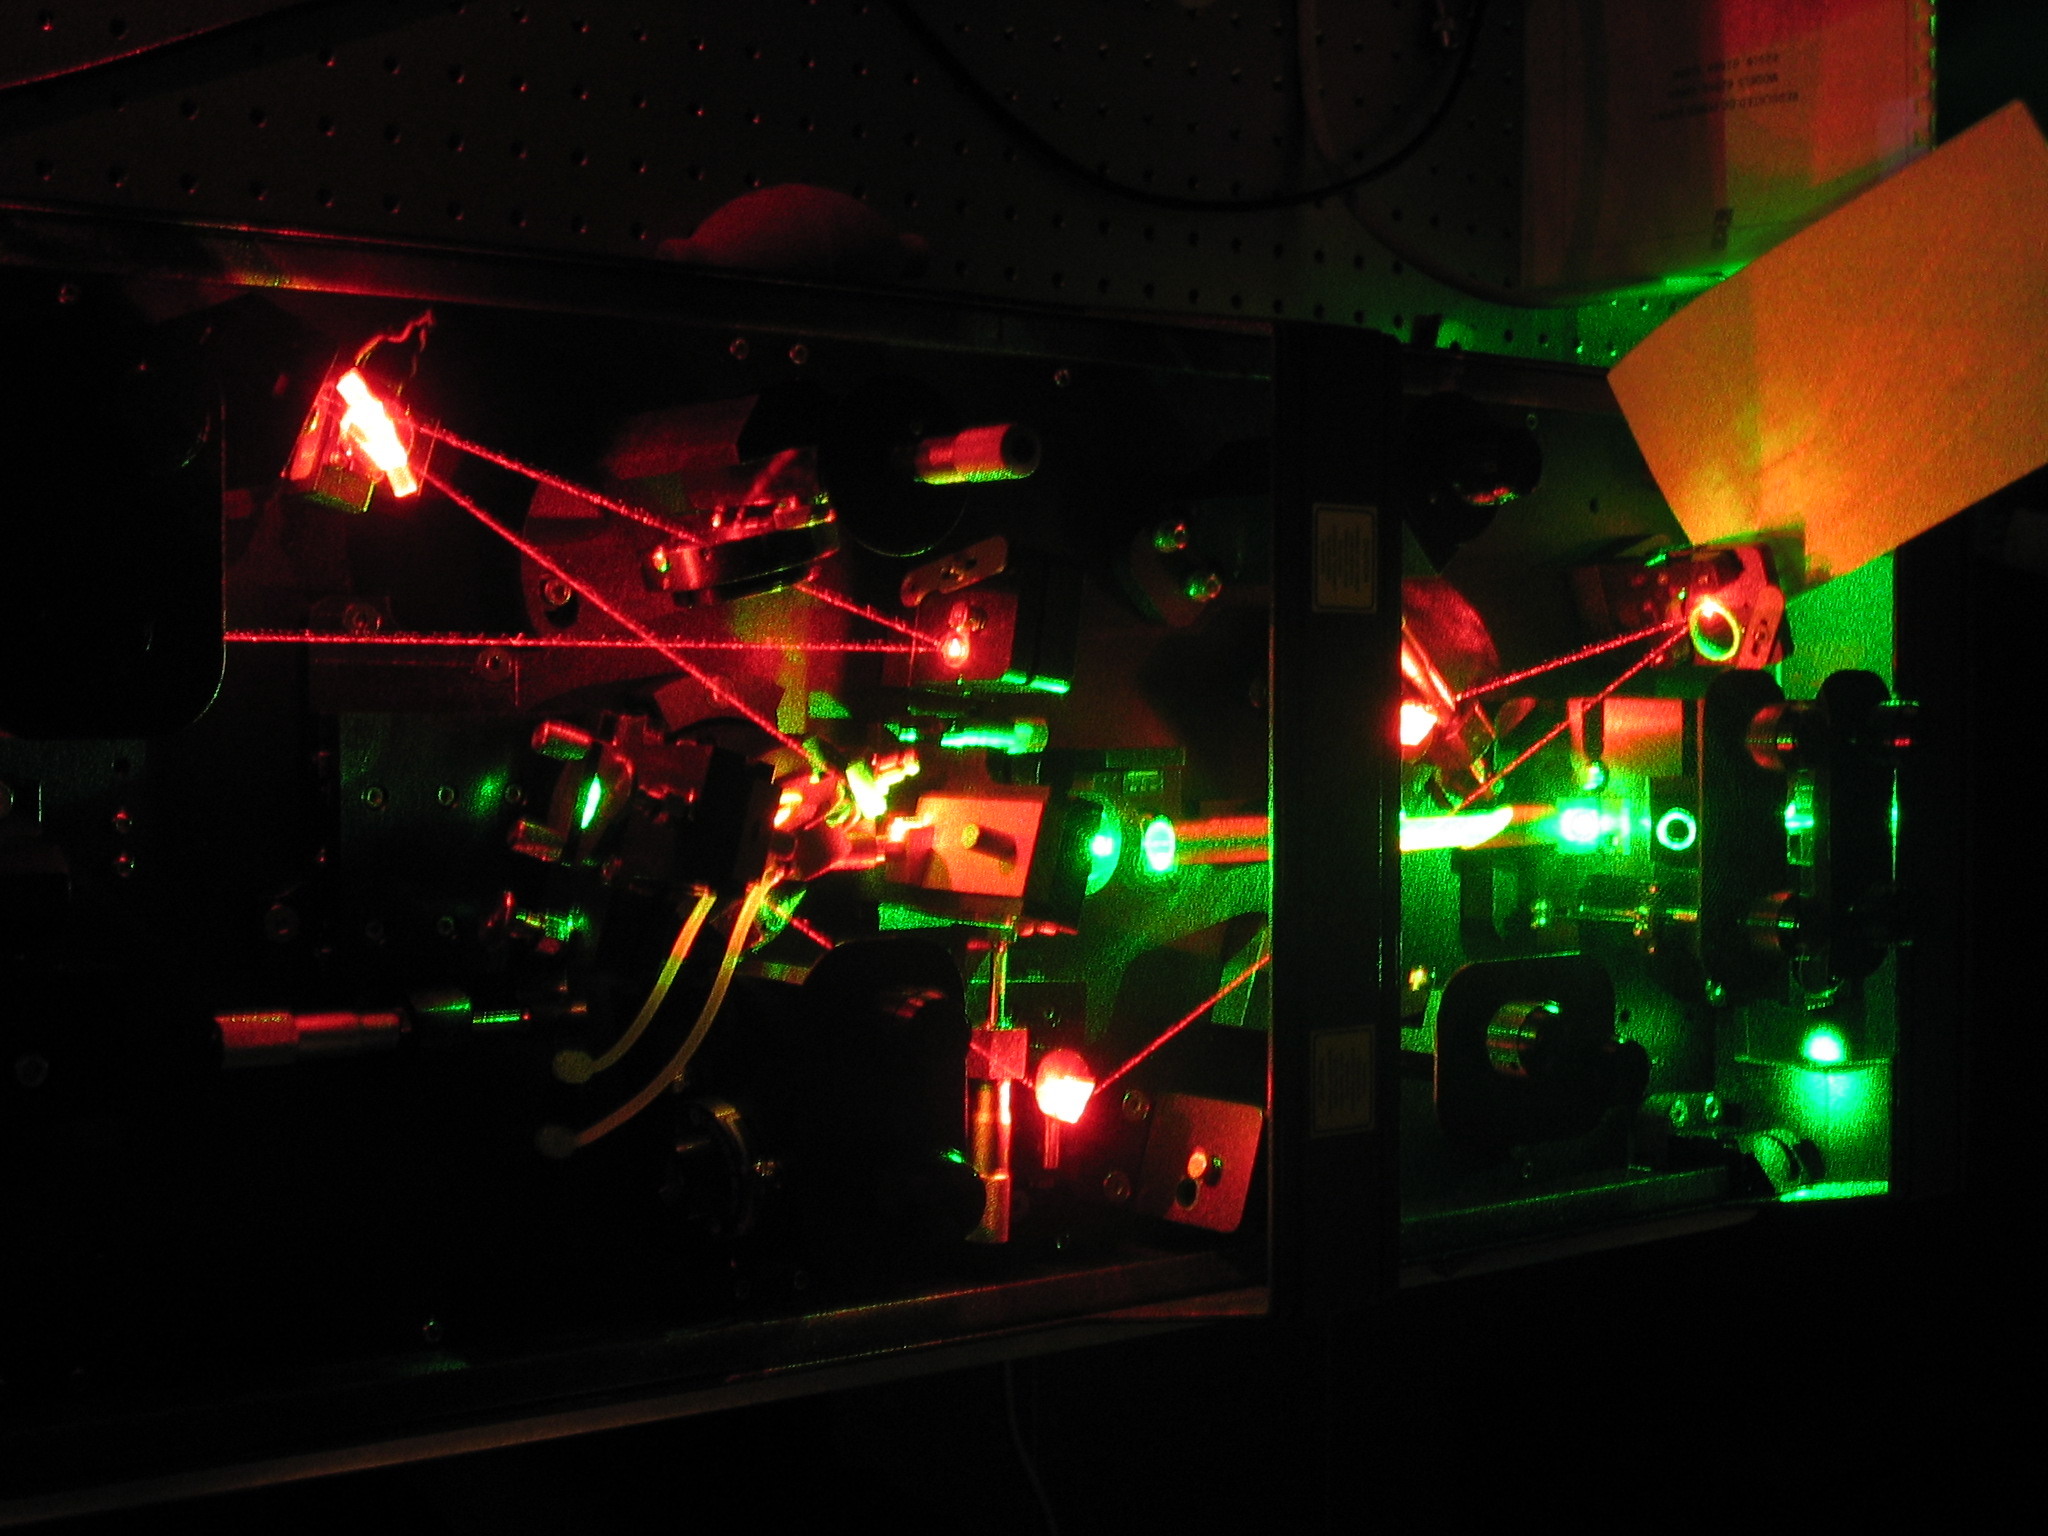 Inside the laser